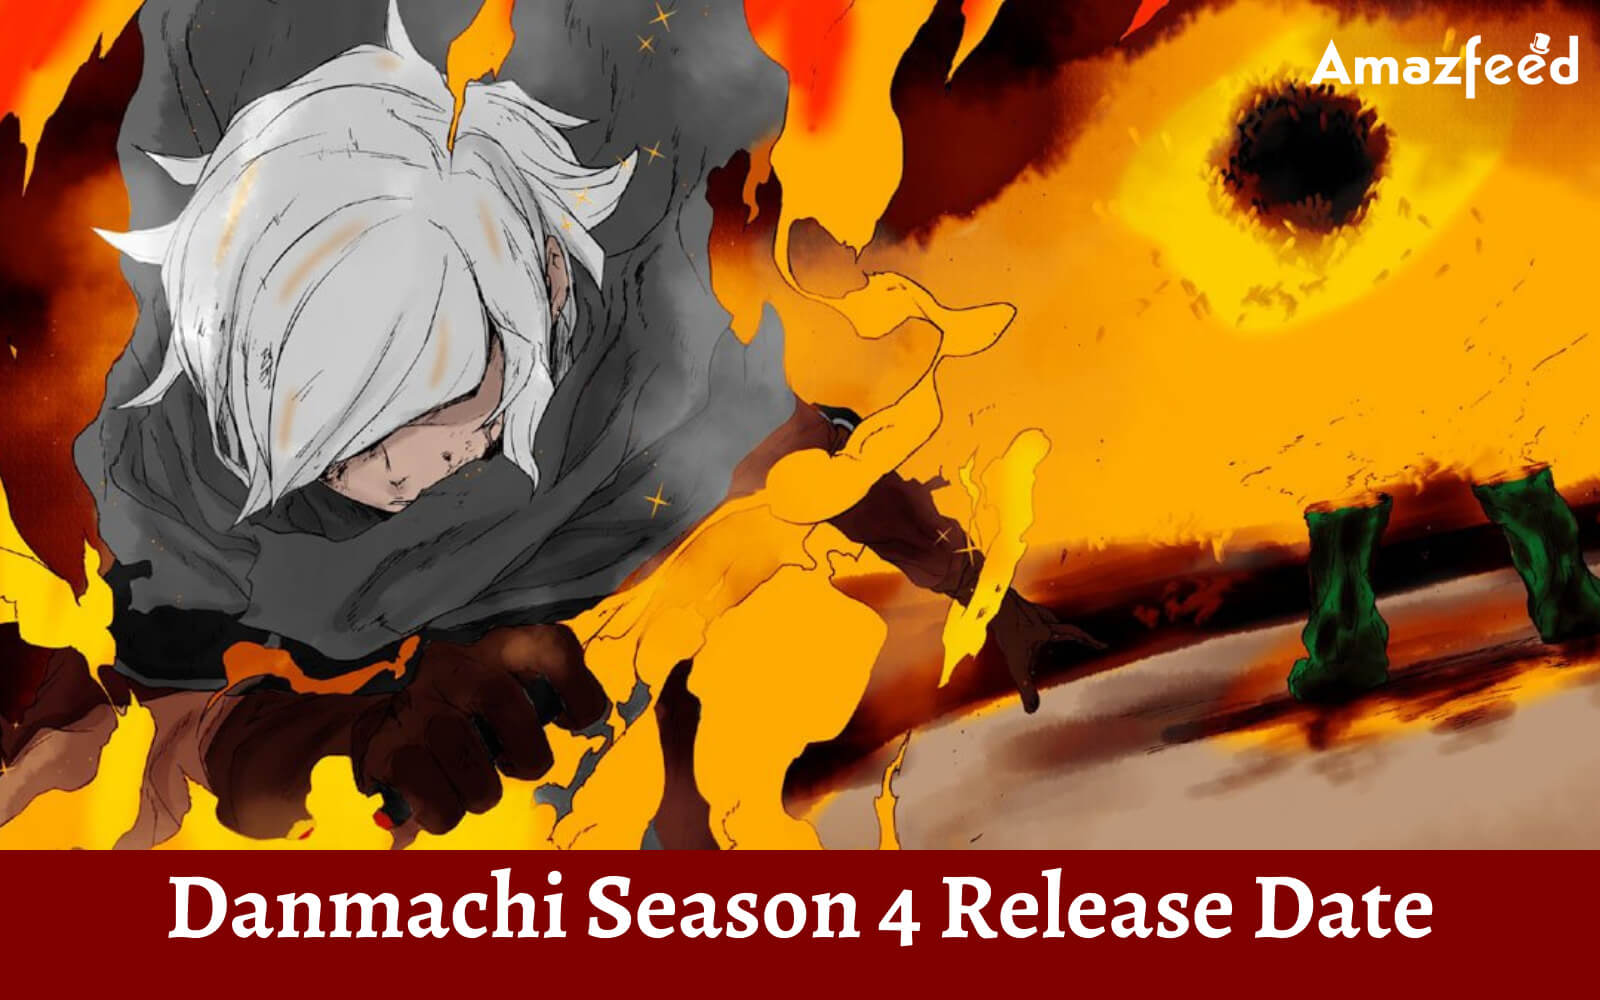 DanMachi Season 4 Part 2 Release Date Confirmed